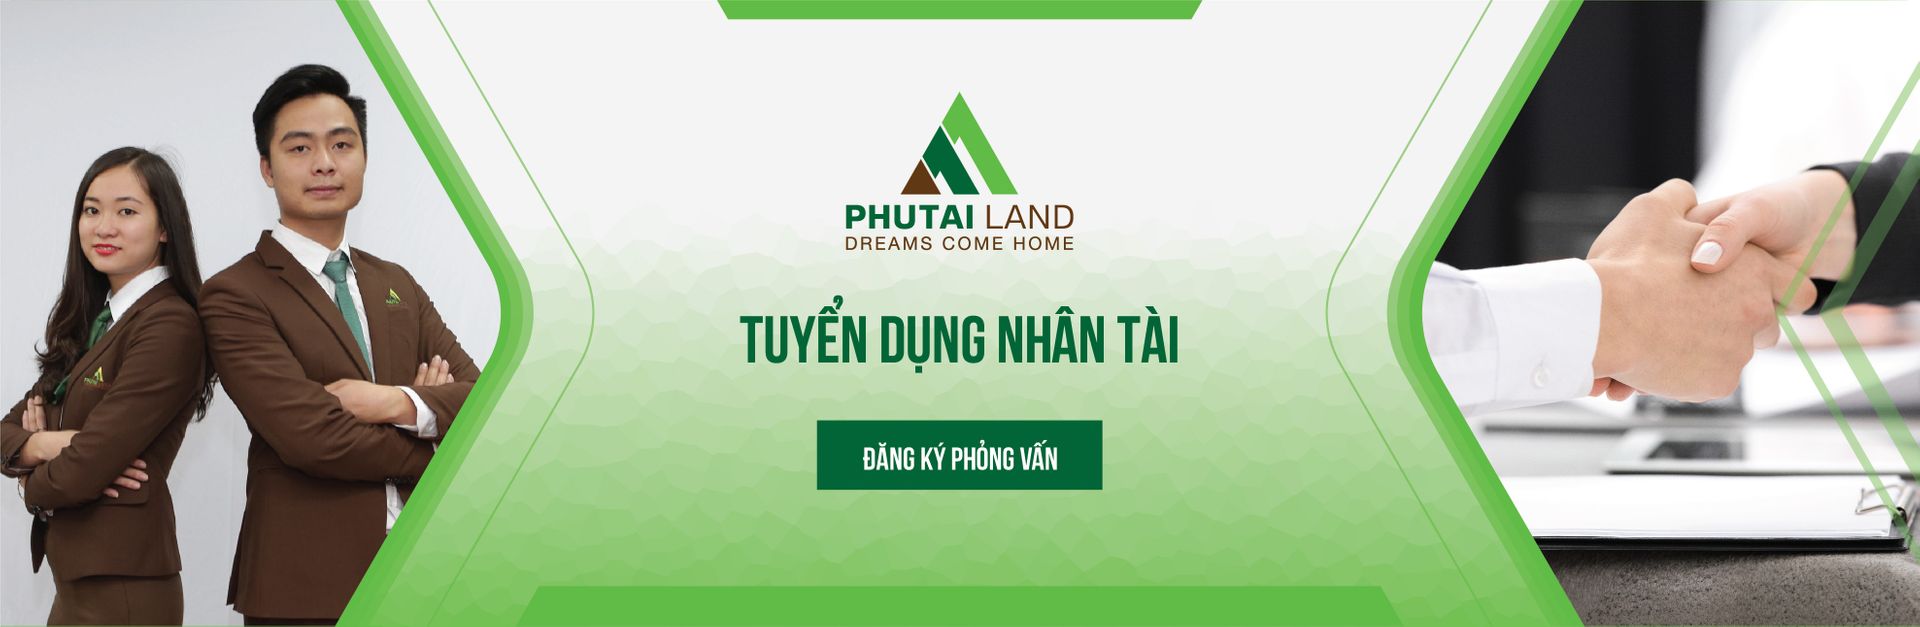 phutailand 01